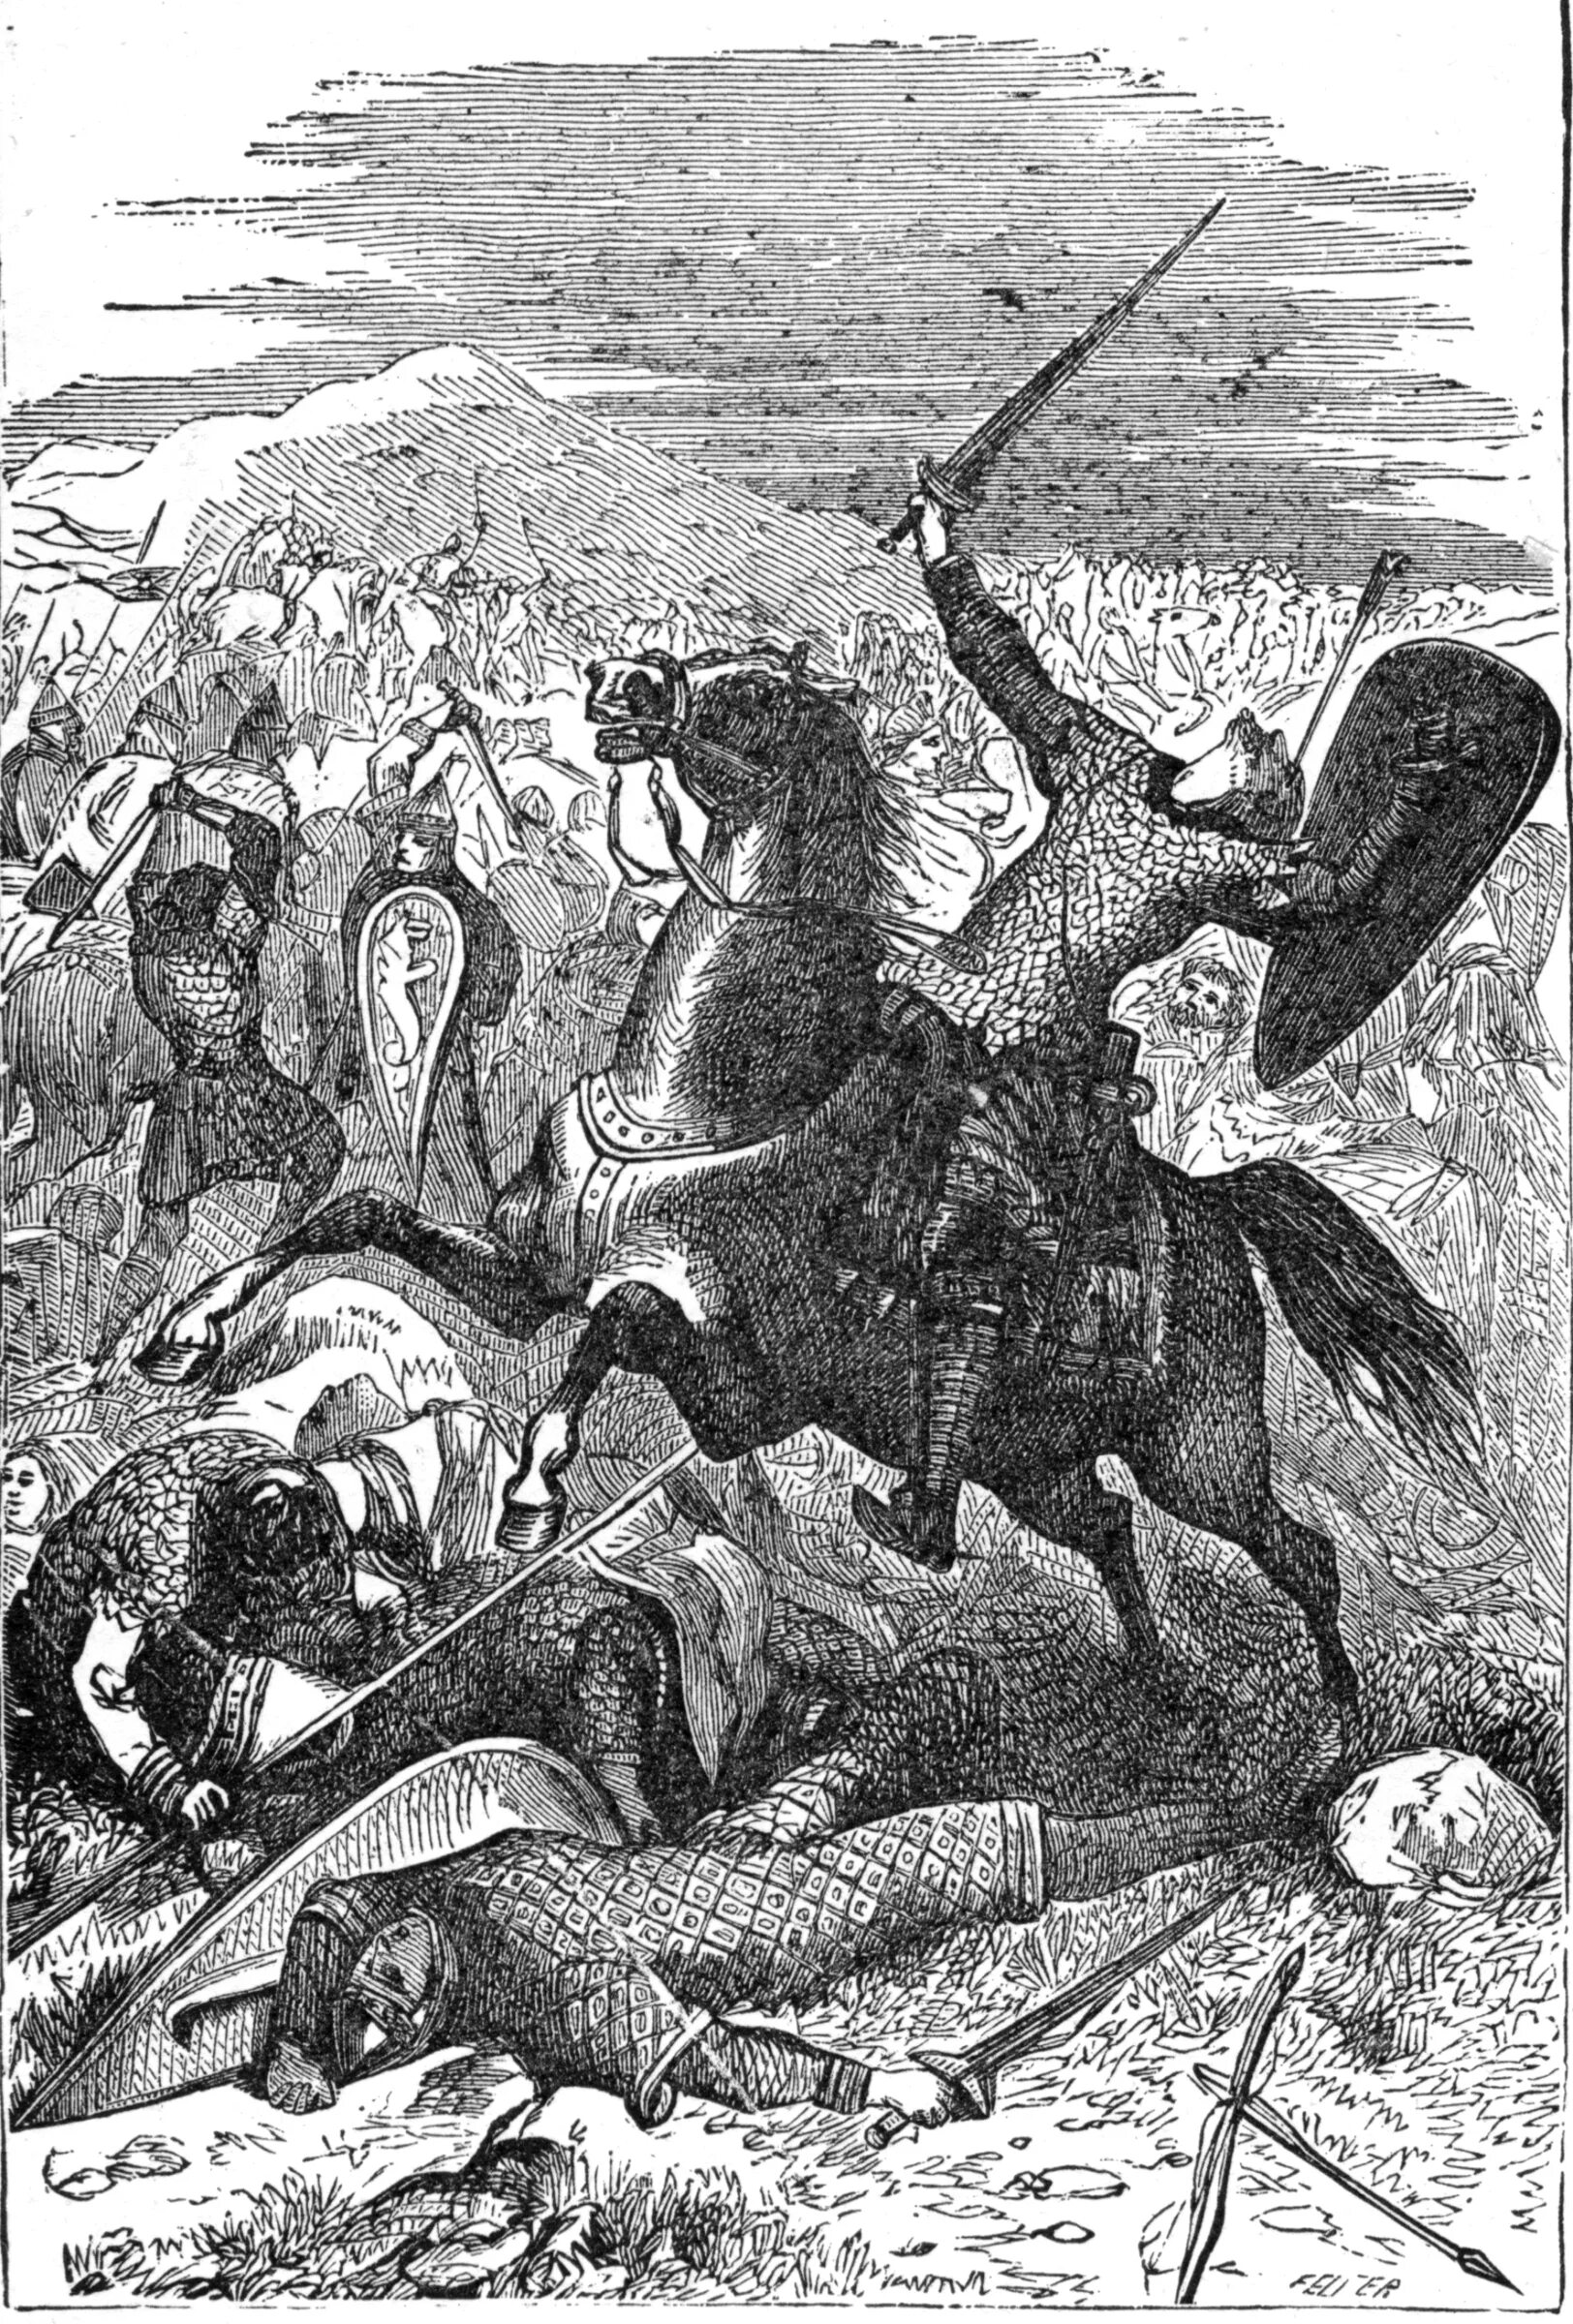 Битва при Гастингсе (1066 г. н.э.). Битва при Гастингсе 1066. Гарольд битва при Гастингсе. Битва при гастингсе произошла